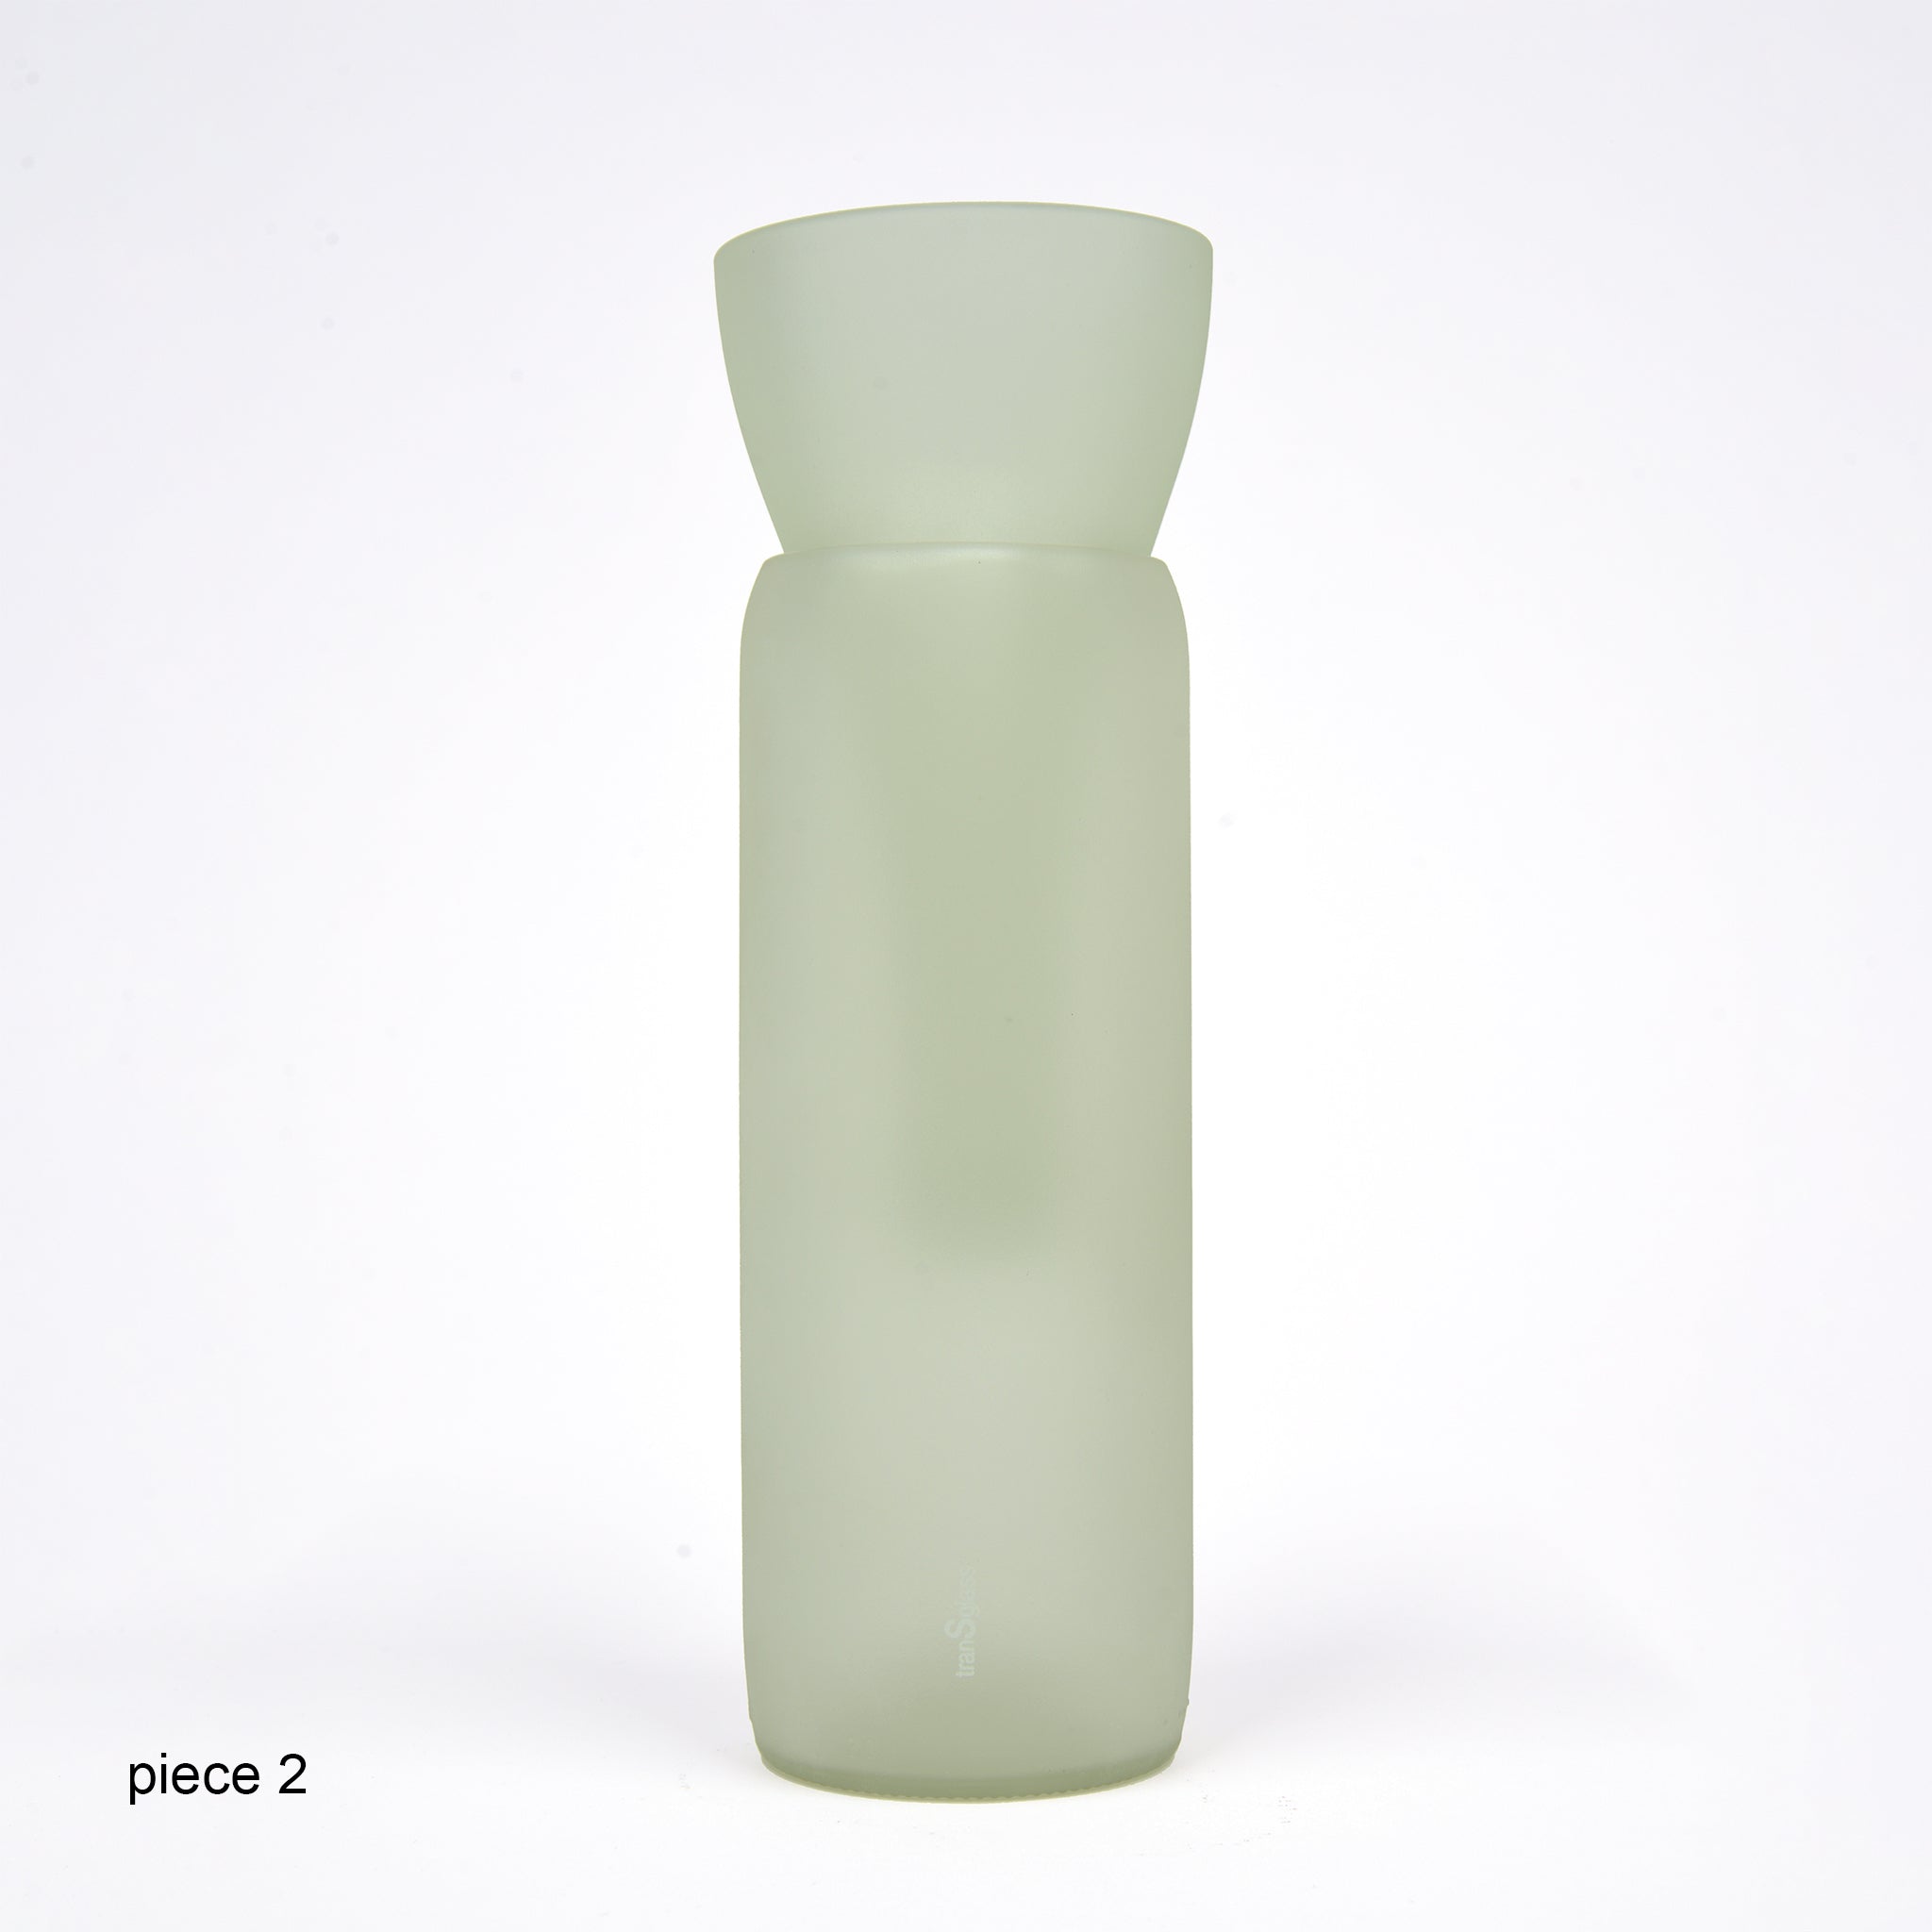 Transglass Vase No 2